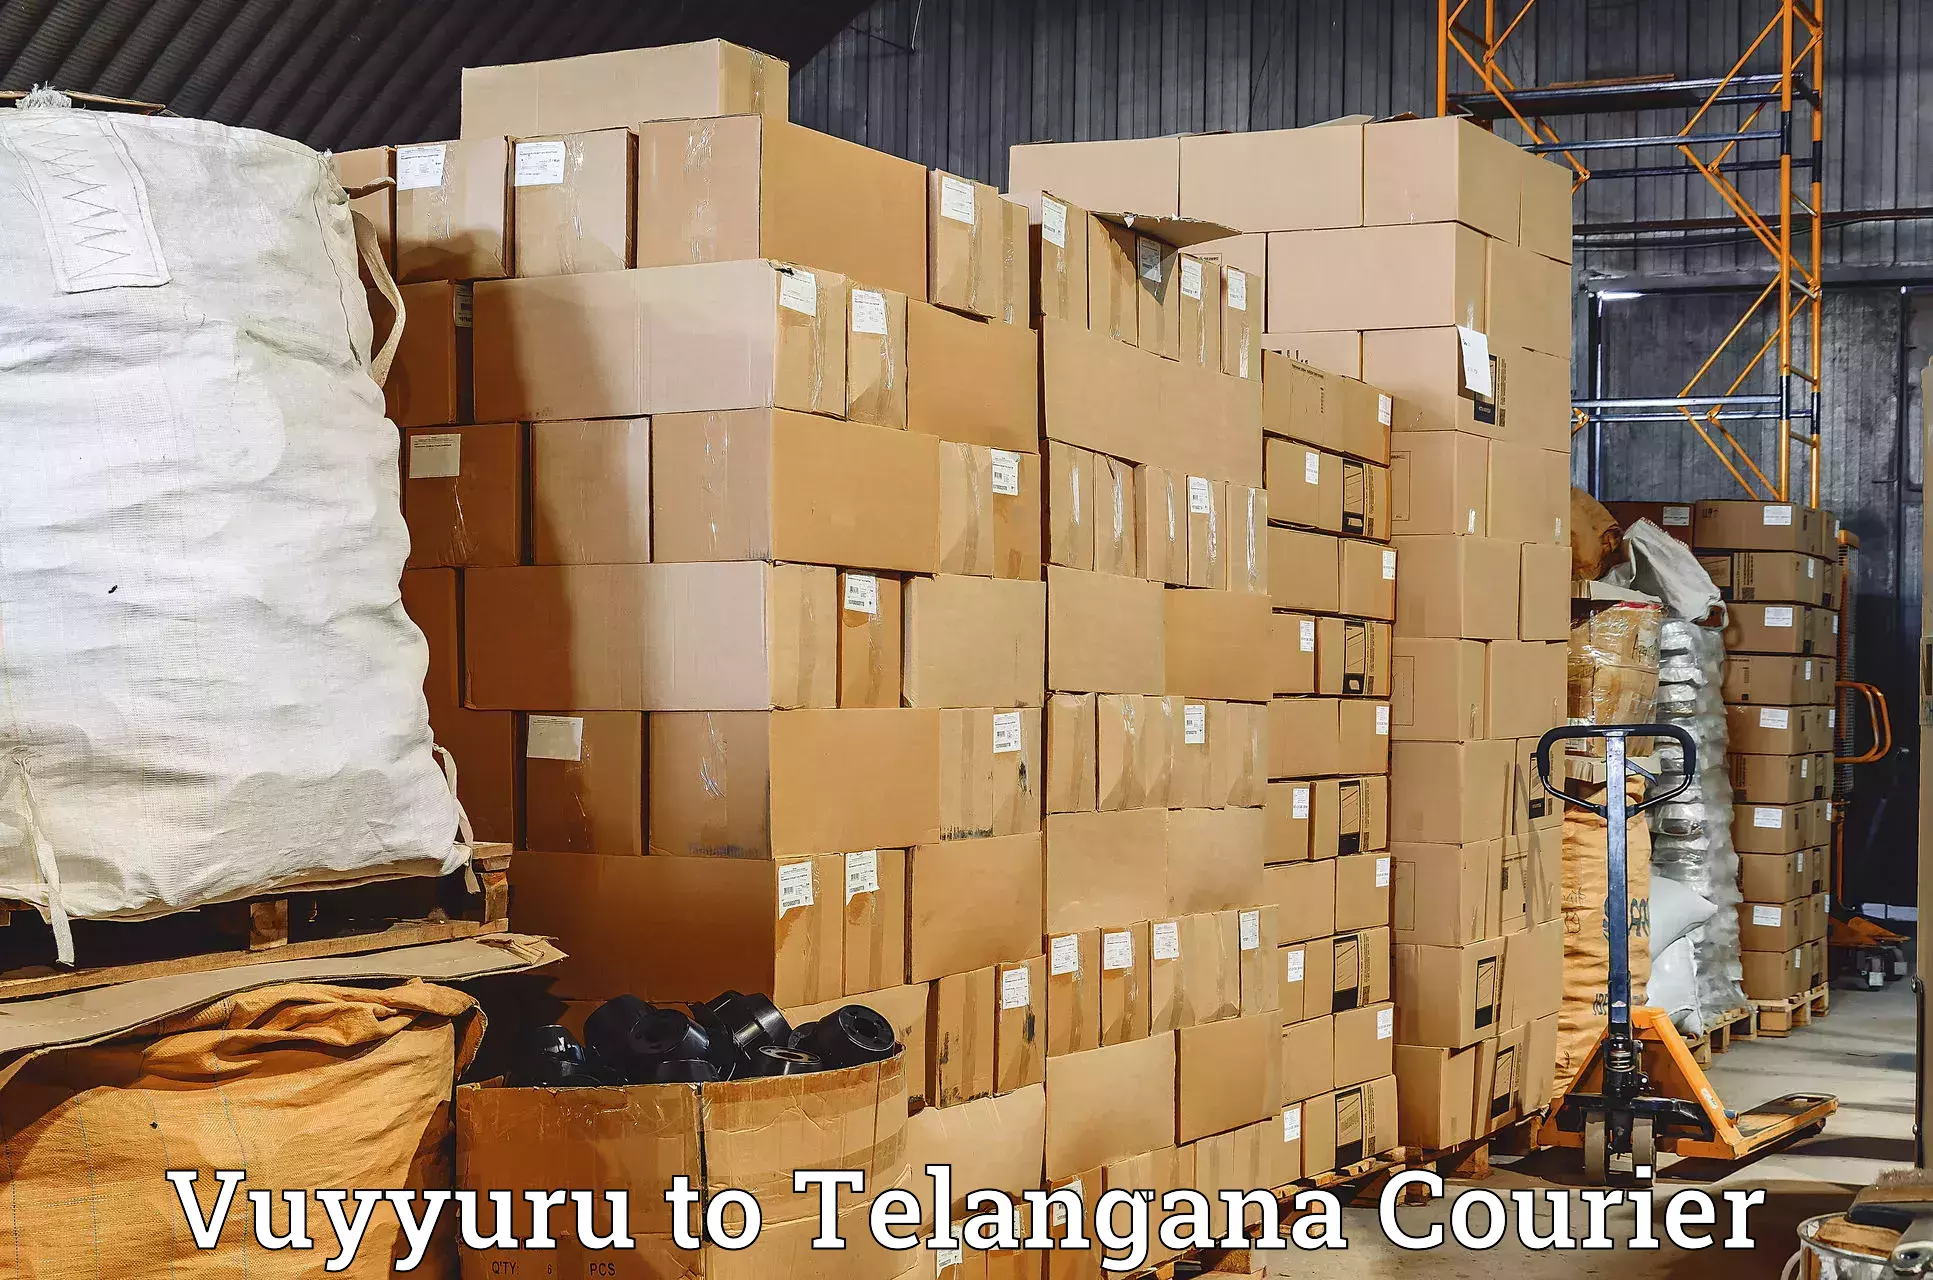 State-of-the-art courier technology in Vuyyuru to Yellandu